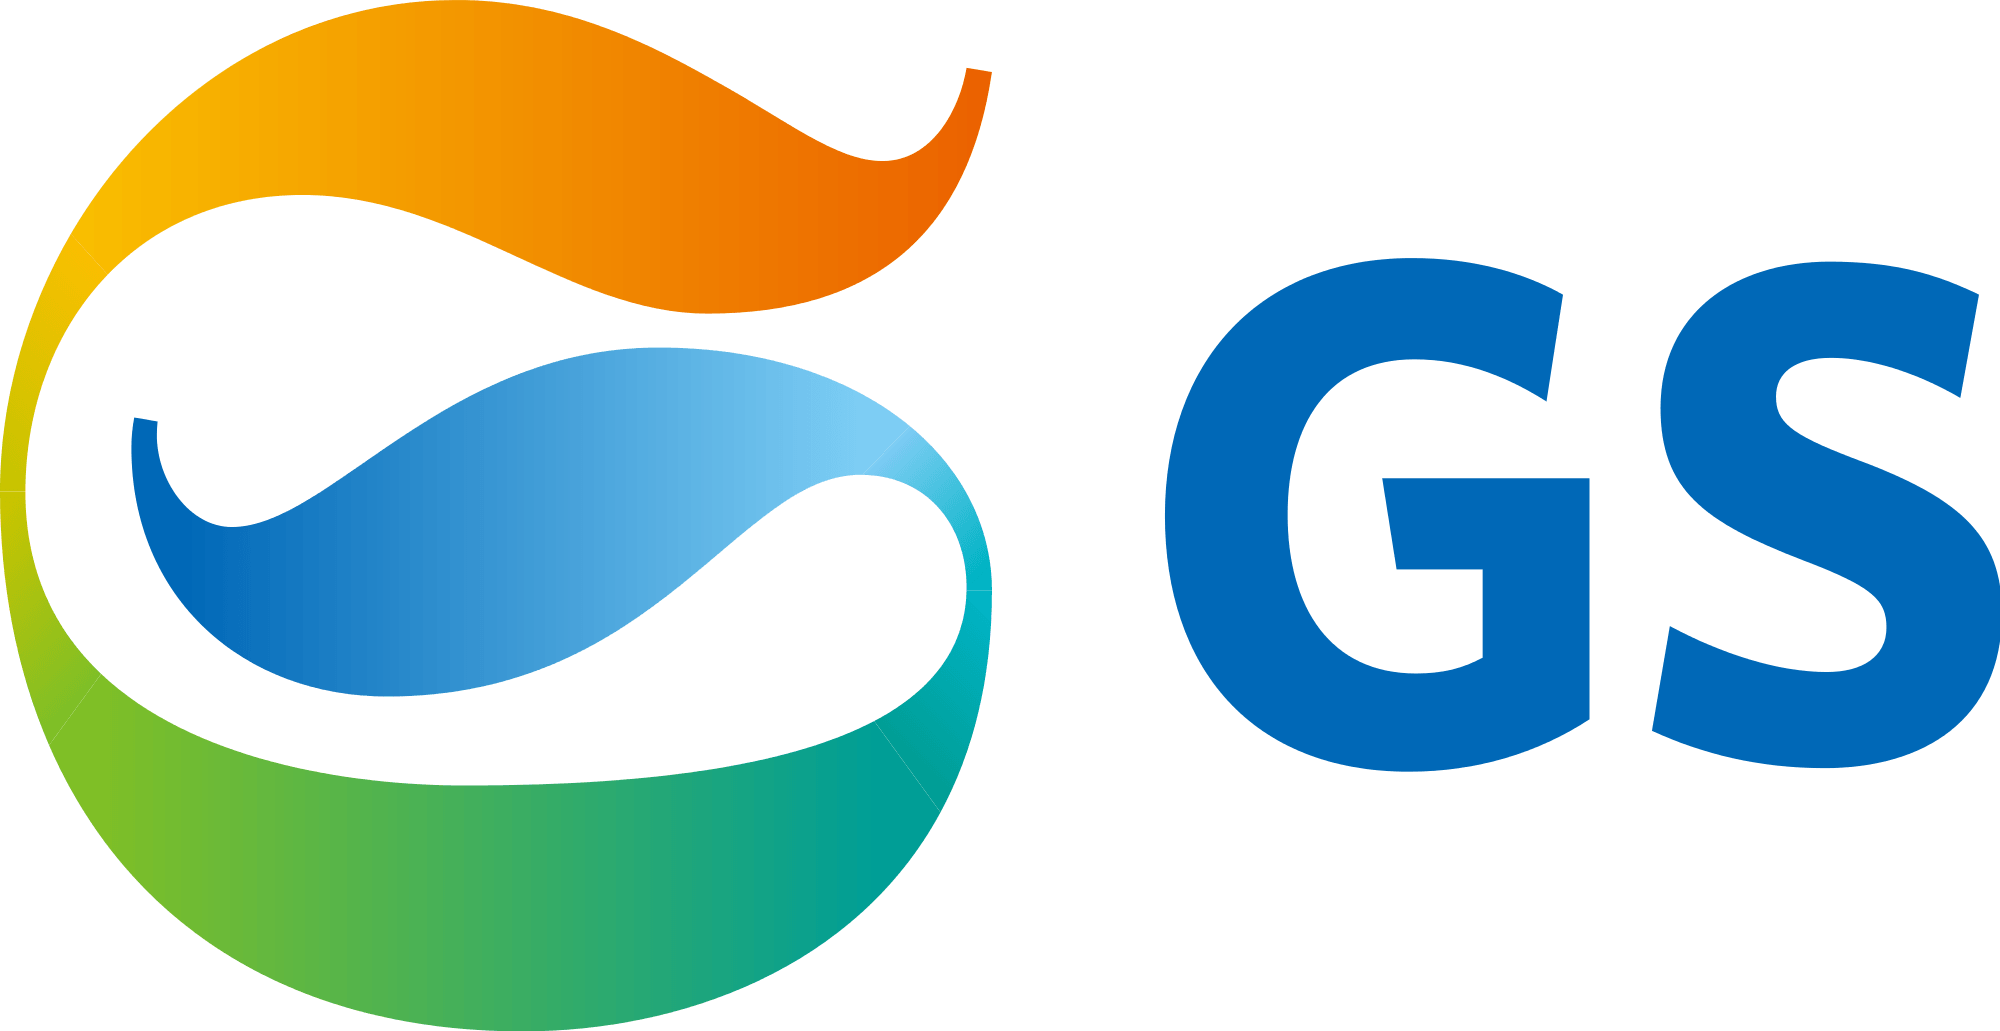 Korean Company Logo - File:GS logo (South Korean company).svg - Wikimedia Commons